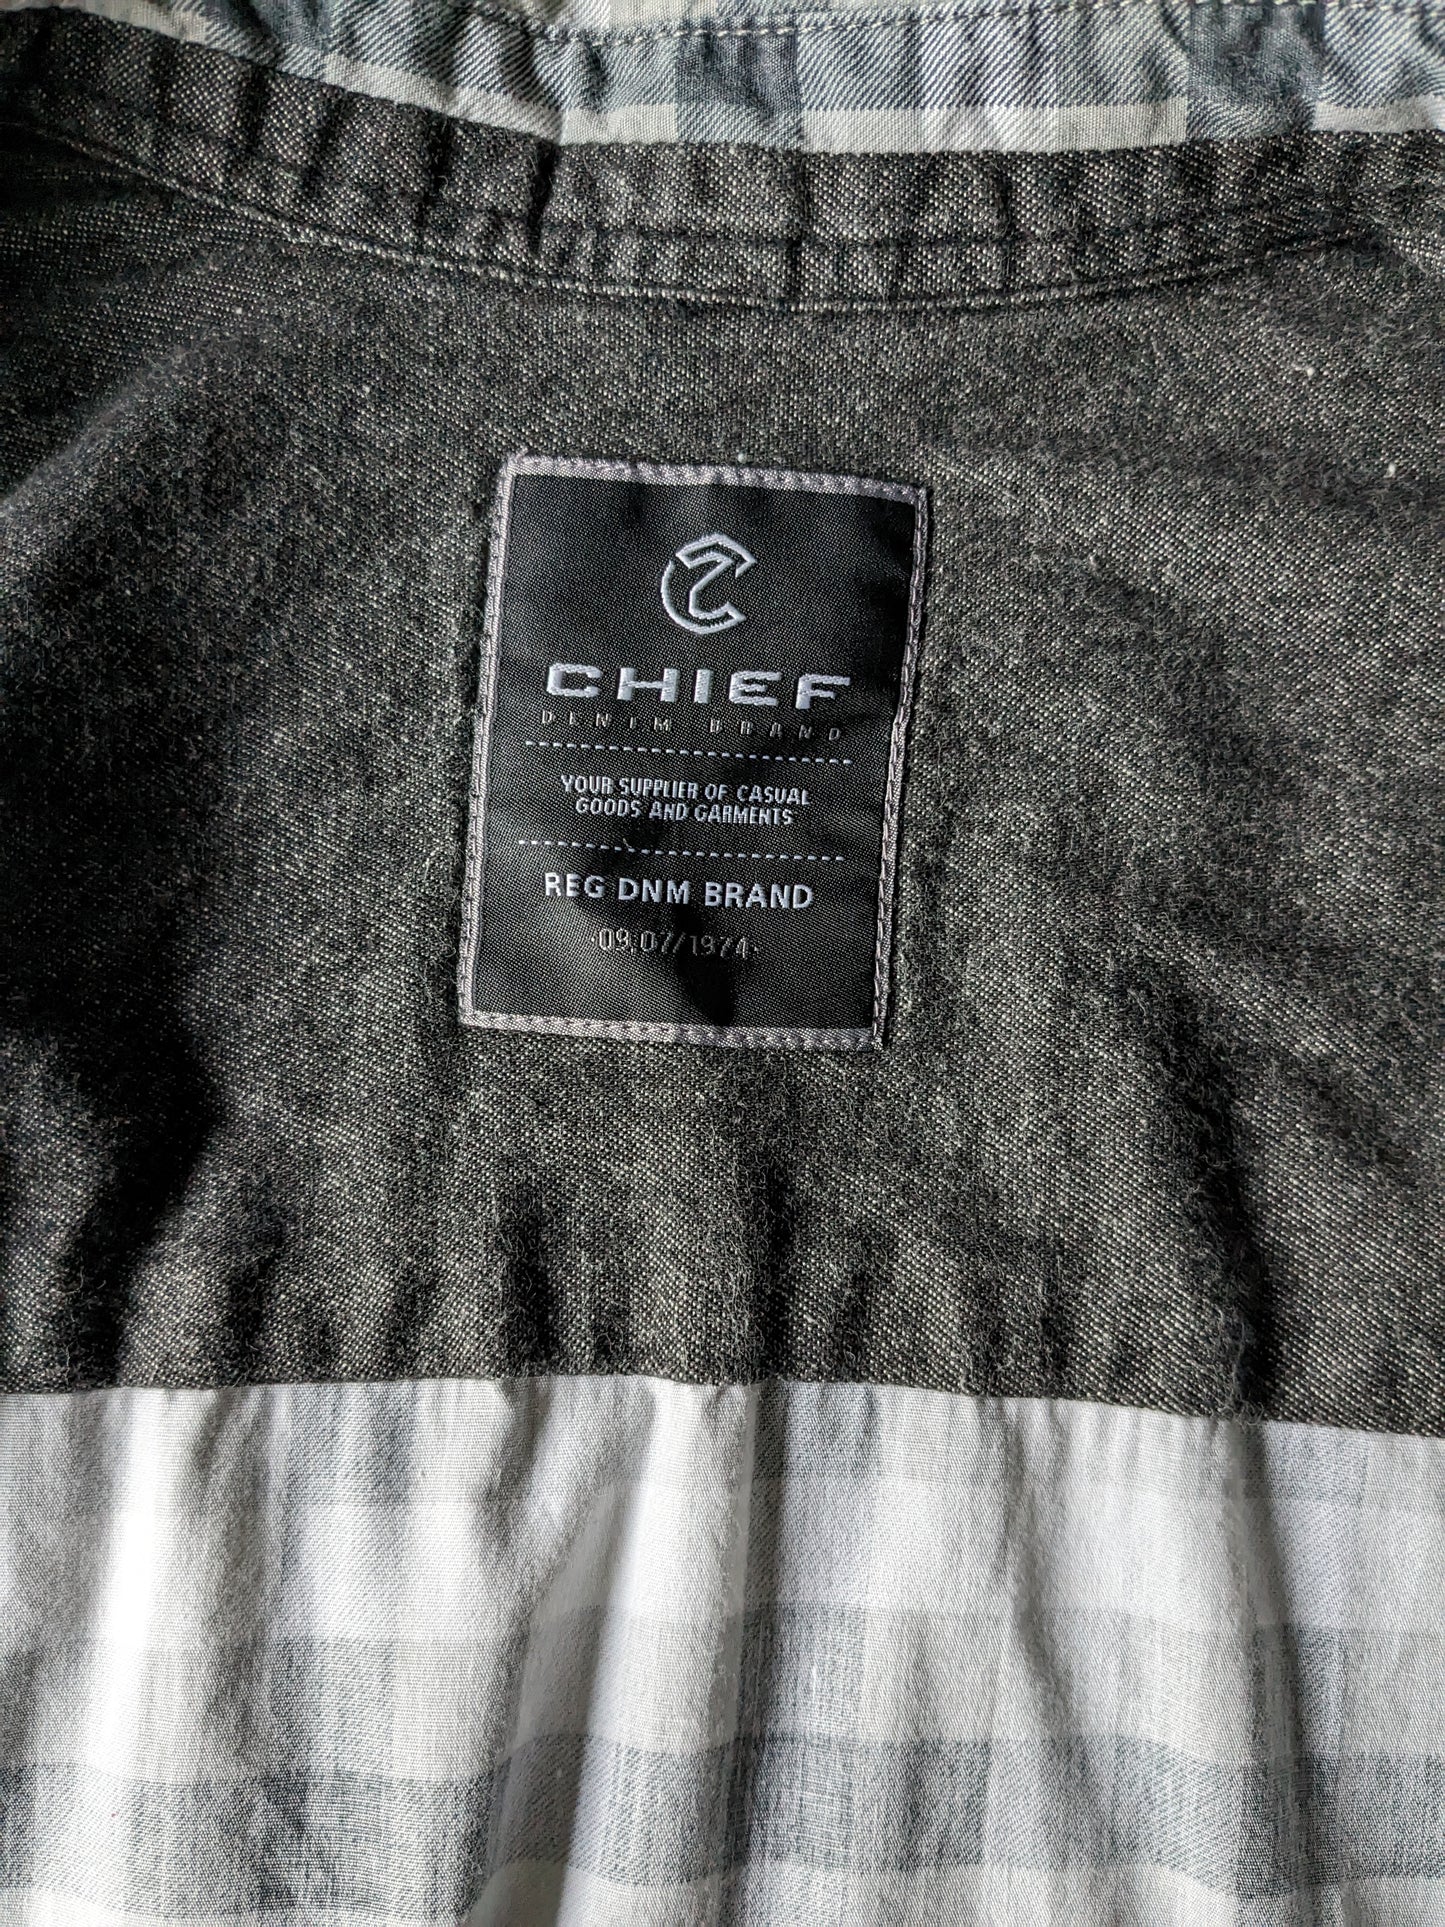 Chief shirt with press studs. Gray black checked. Size XL / XXL.